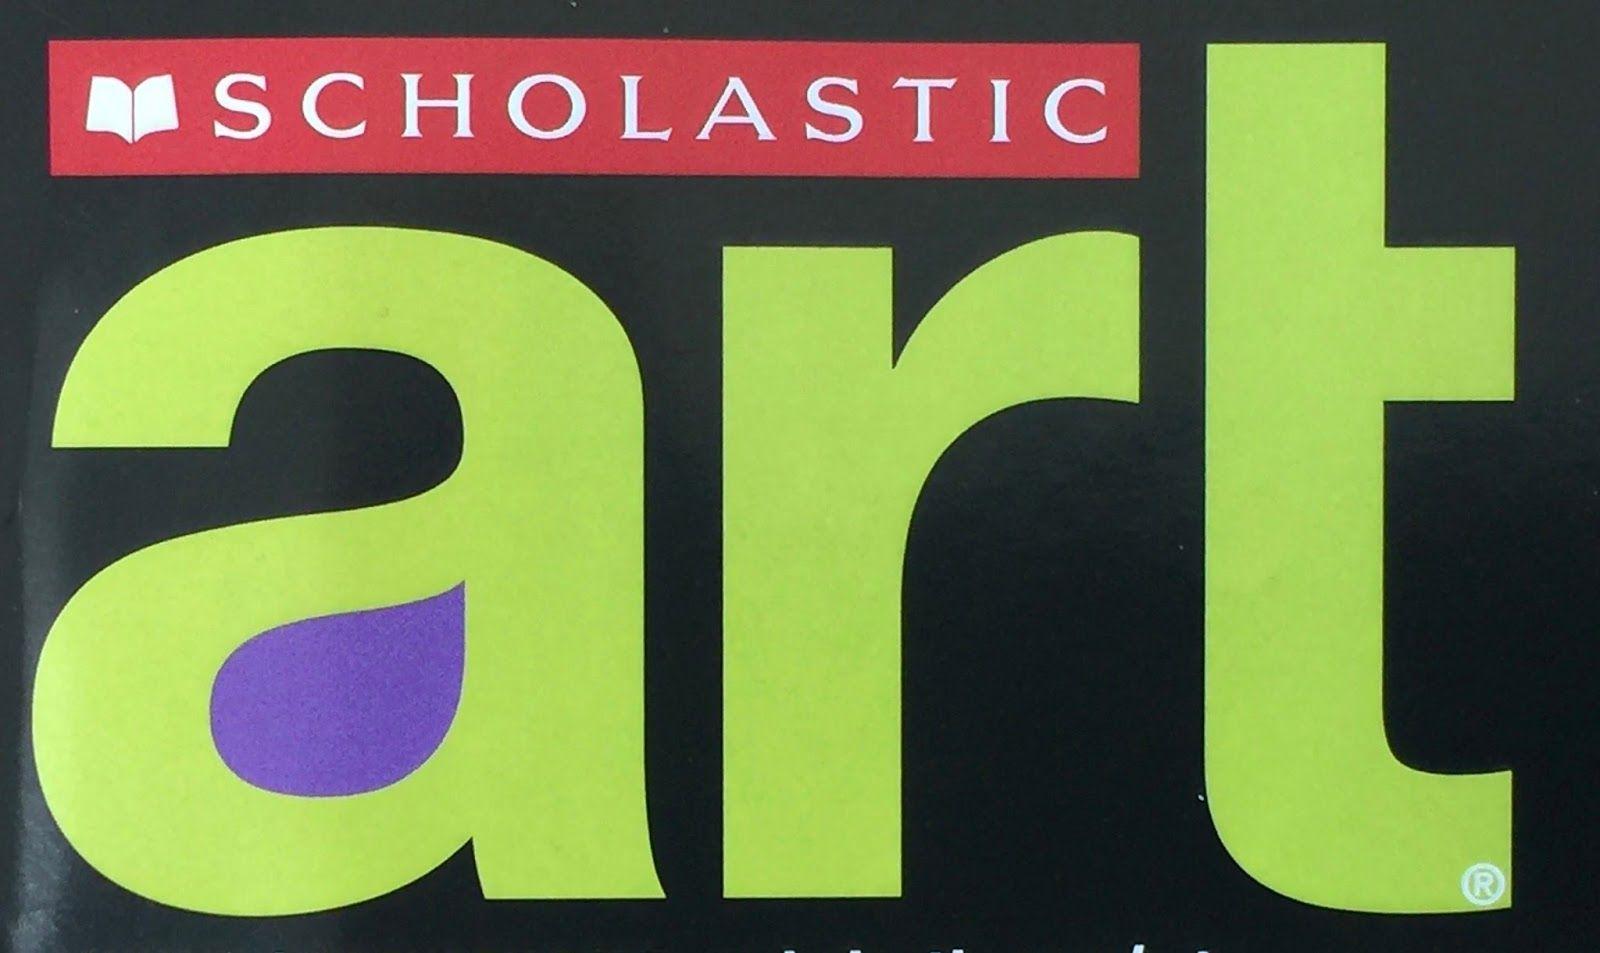 School Arts Magazine Logo - Baldauf BlogART: Review of Scholastic Art Magazine & Giveway of a